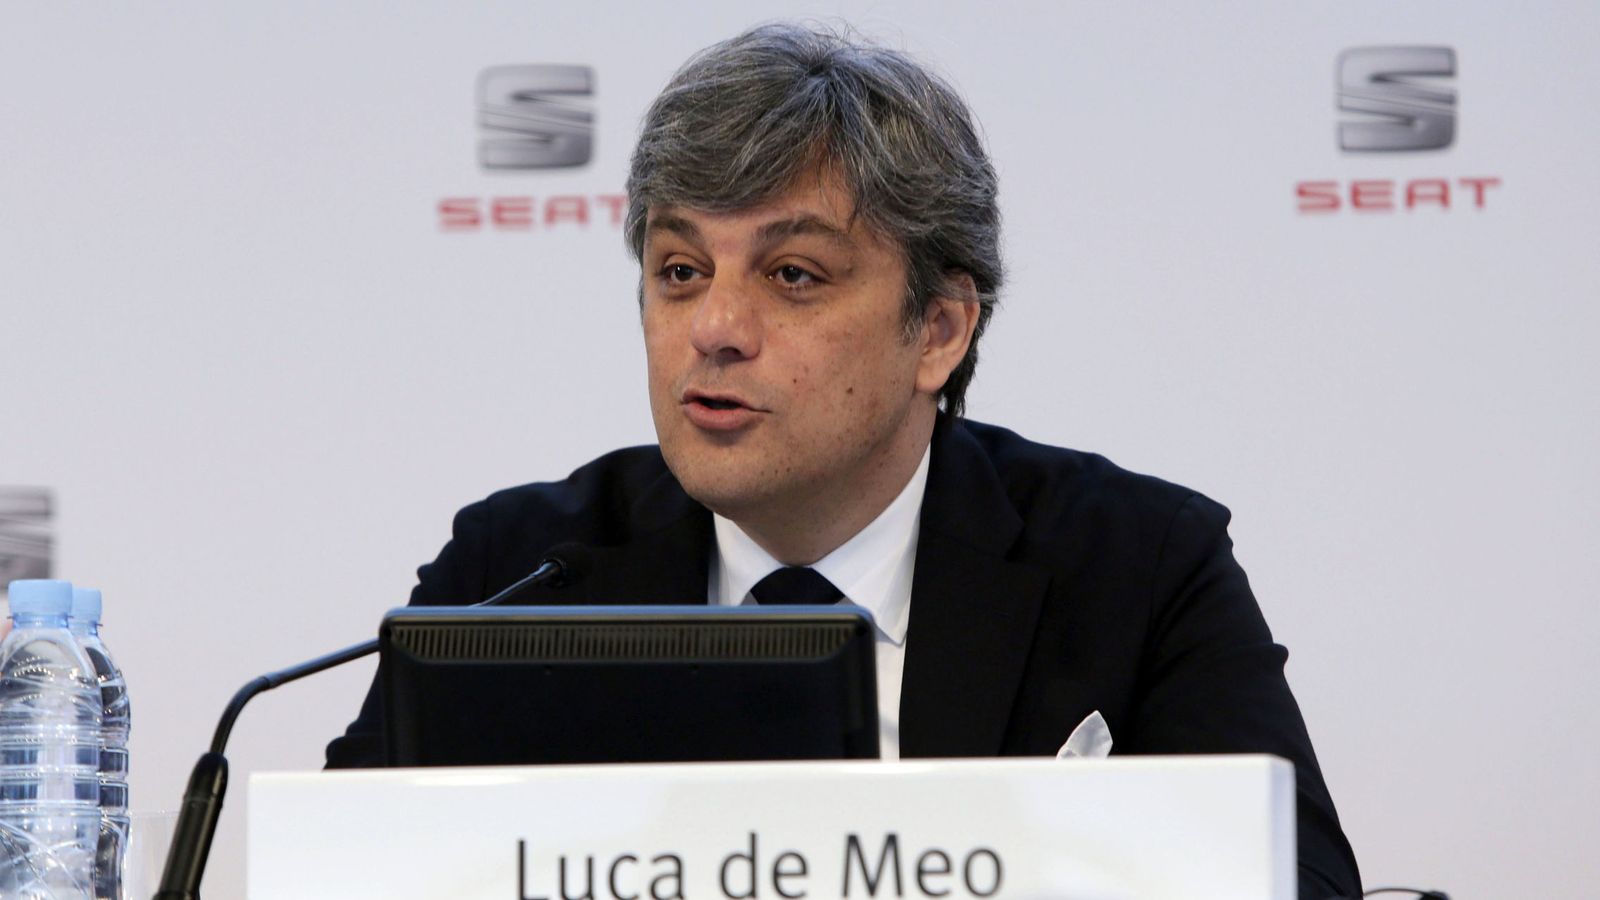 Foto: Luca de Meo, presidente de Seat. (EFE)